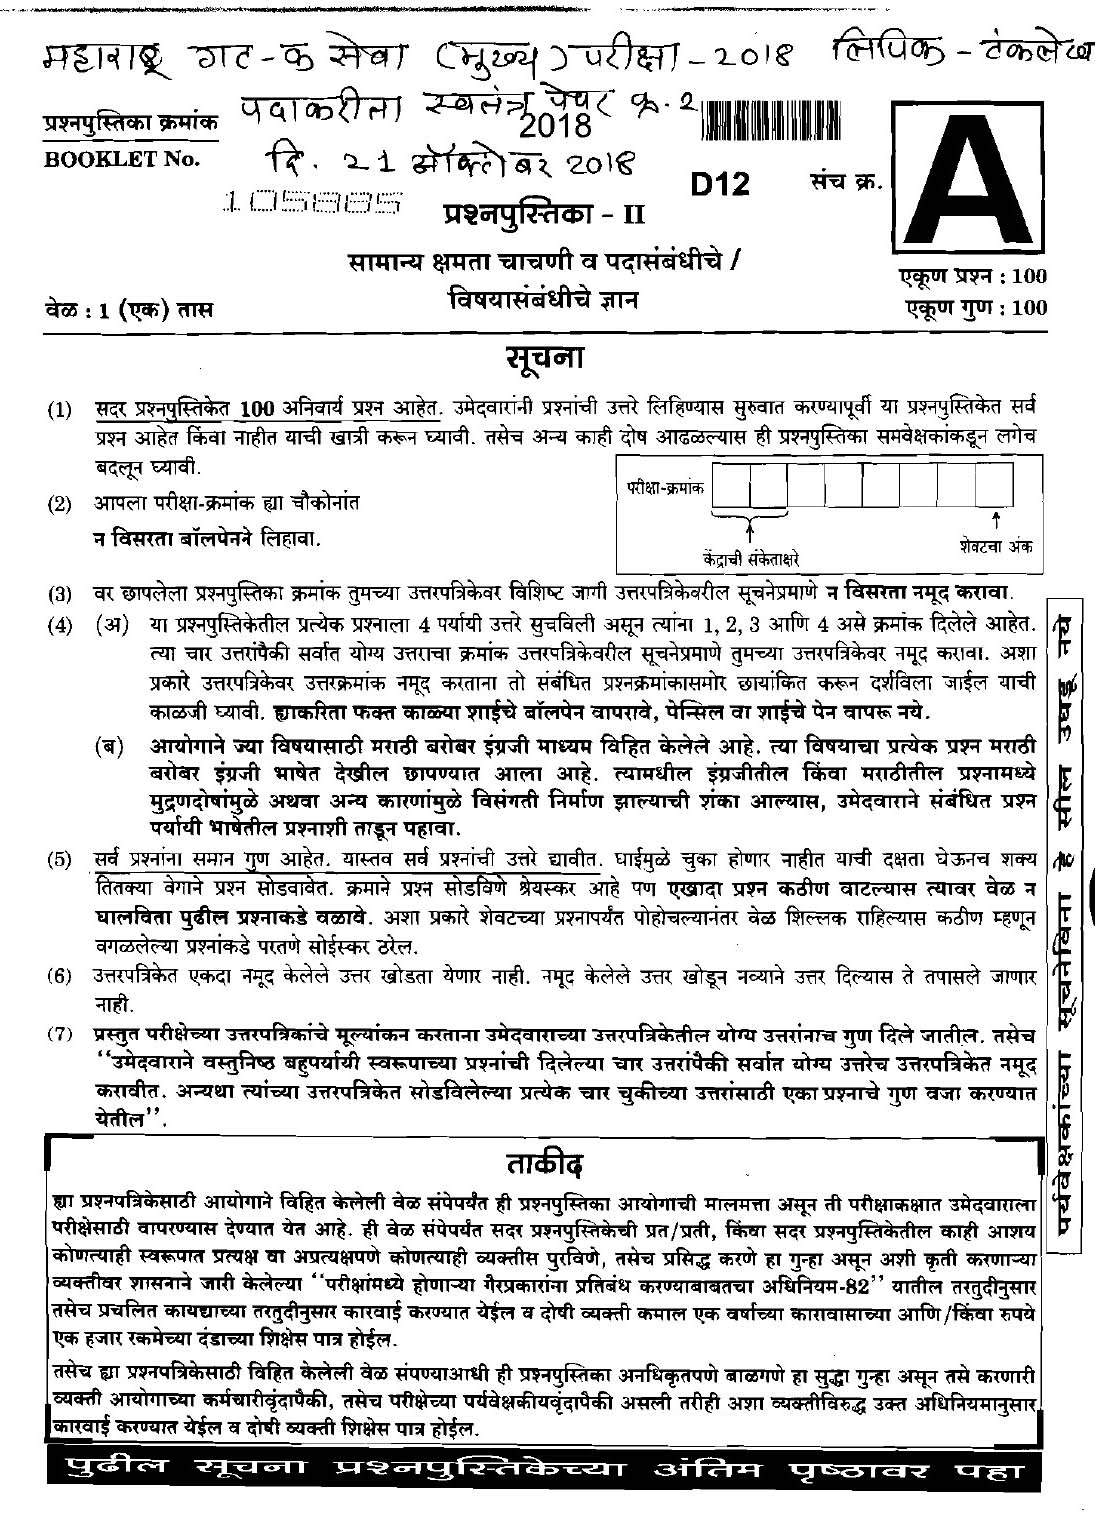 Maharashtra PSC Clerk Typist Main Exam Question Paper 2018 1